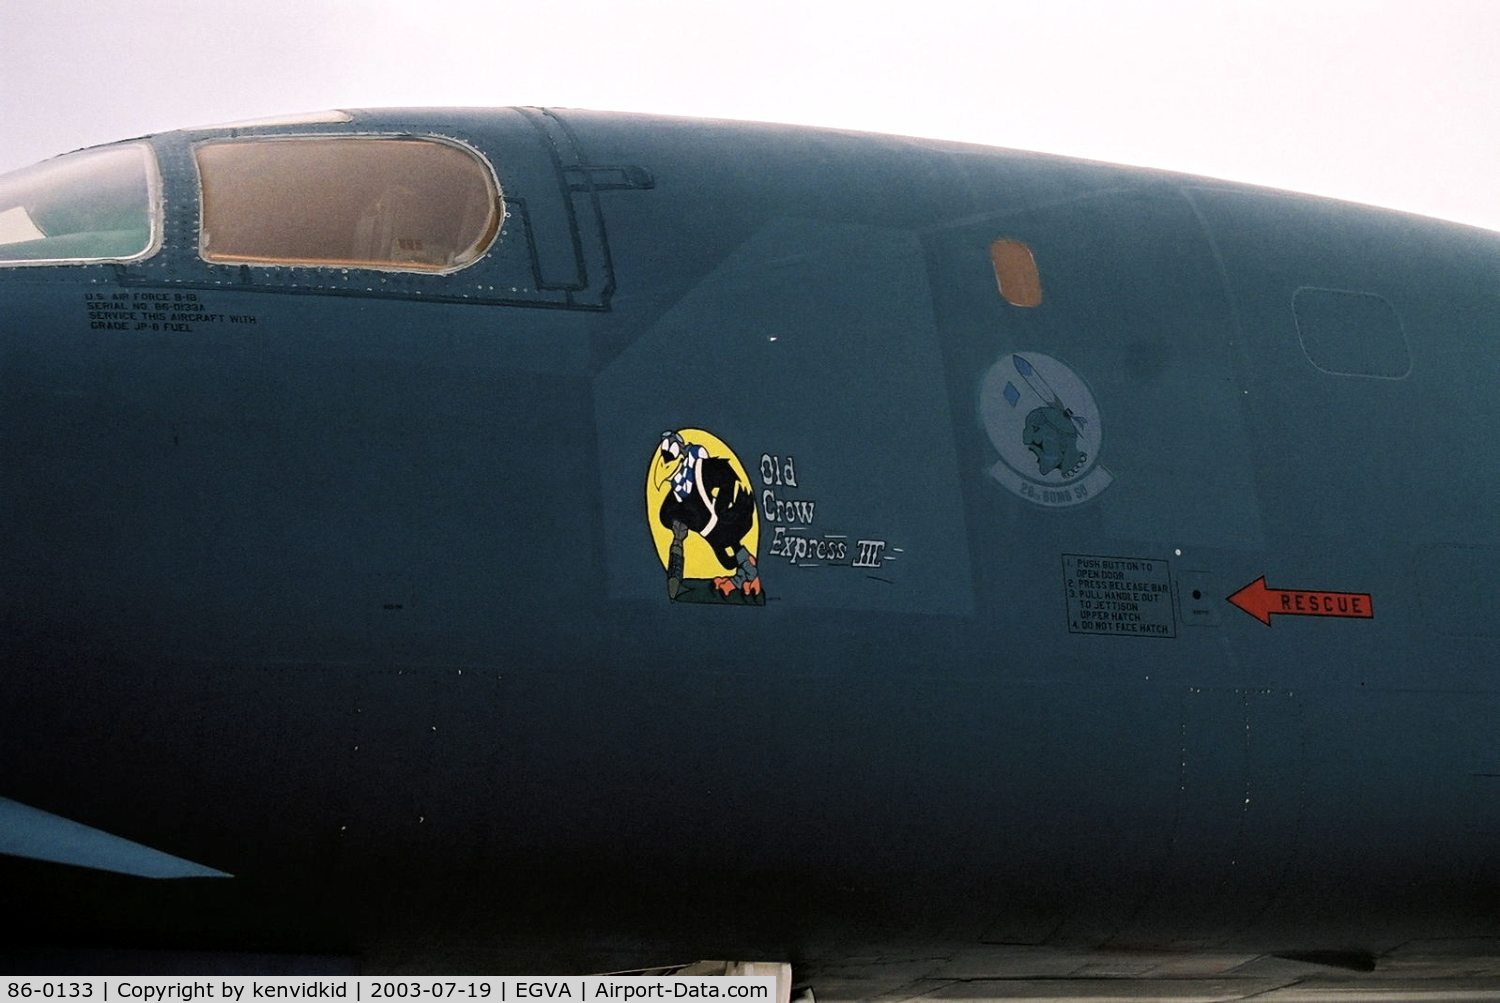 86-0133, 1986 Rockwell B-1B Lancer C/N 93, US Air Force at RIAT.
Nose art detail.